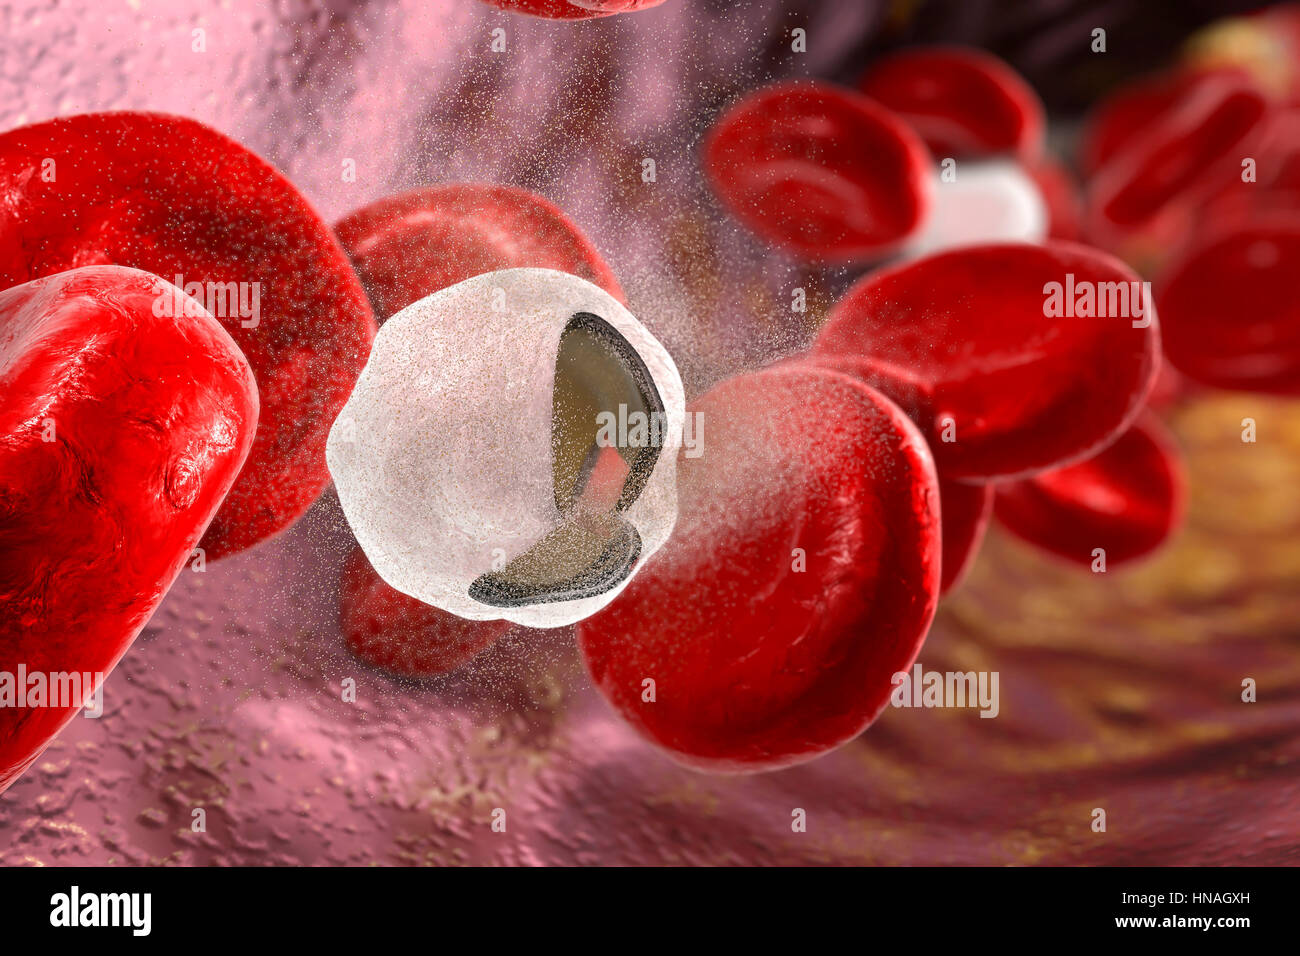 Destruction of white blood cell, illustration. Stock Photo